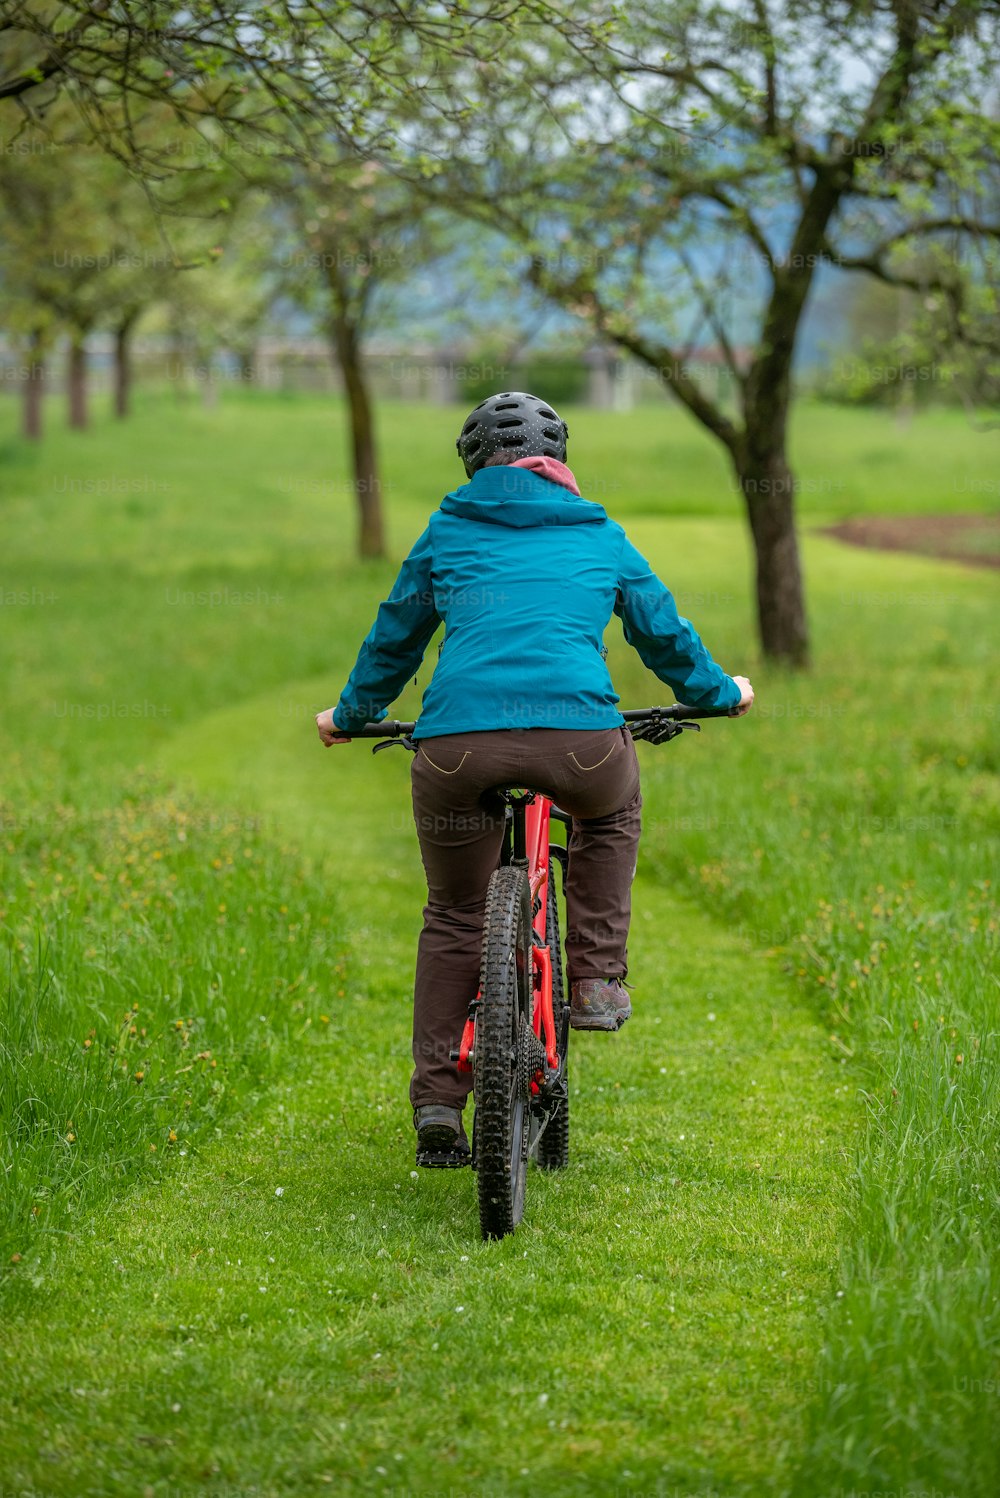 a woman riding a bike down a lush green field